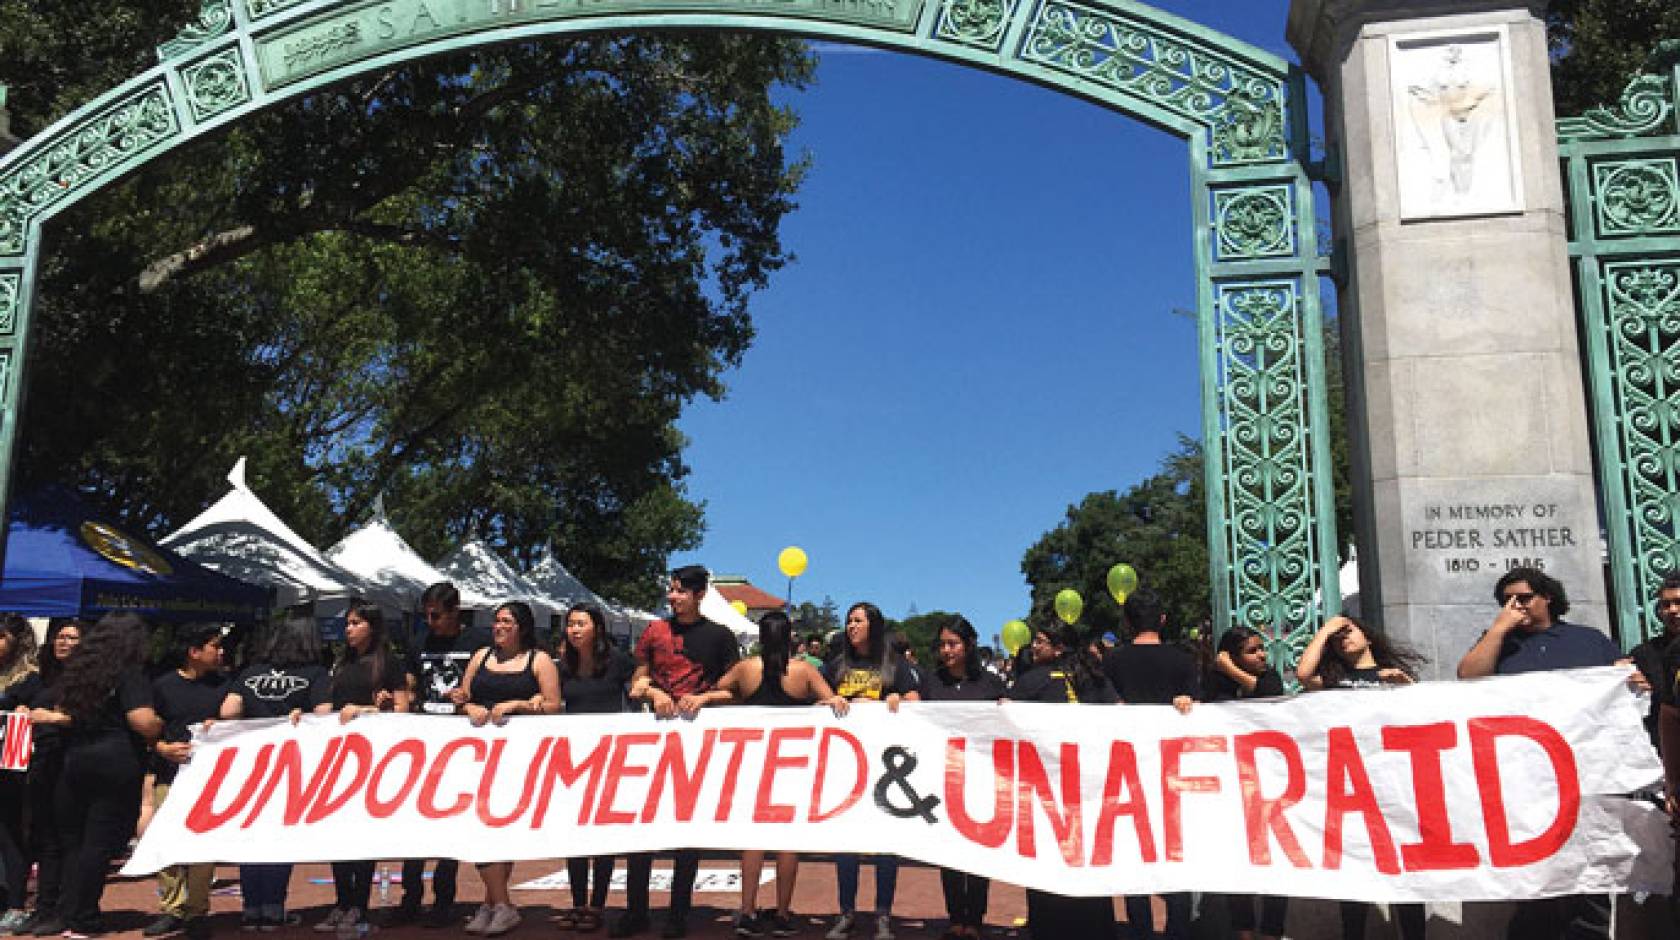 UC Berkeley undoc and unafraid rally